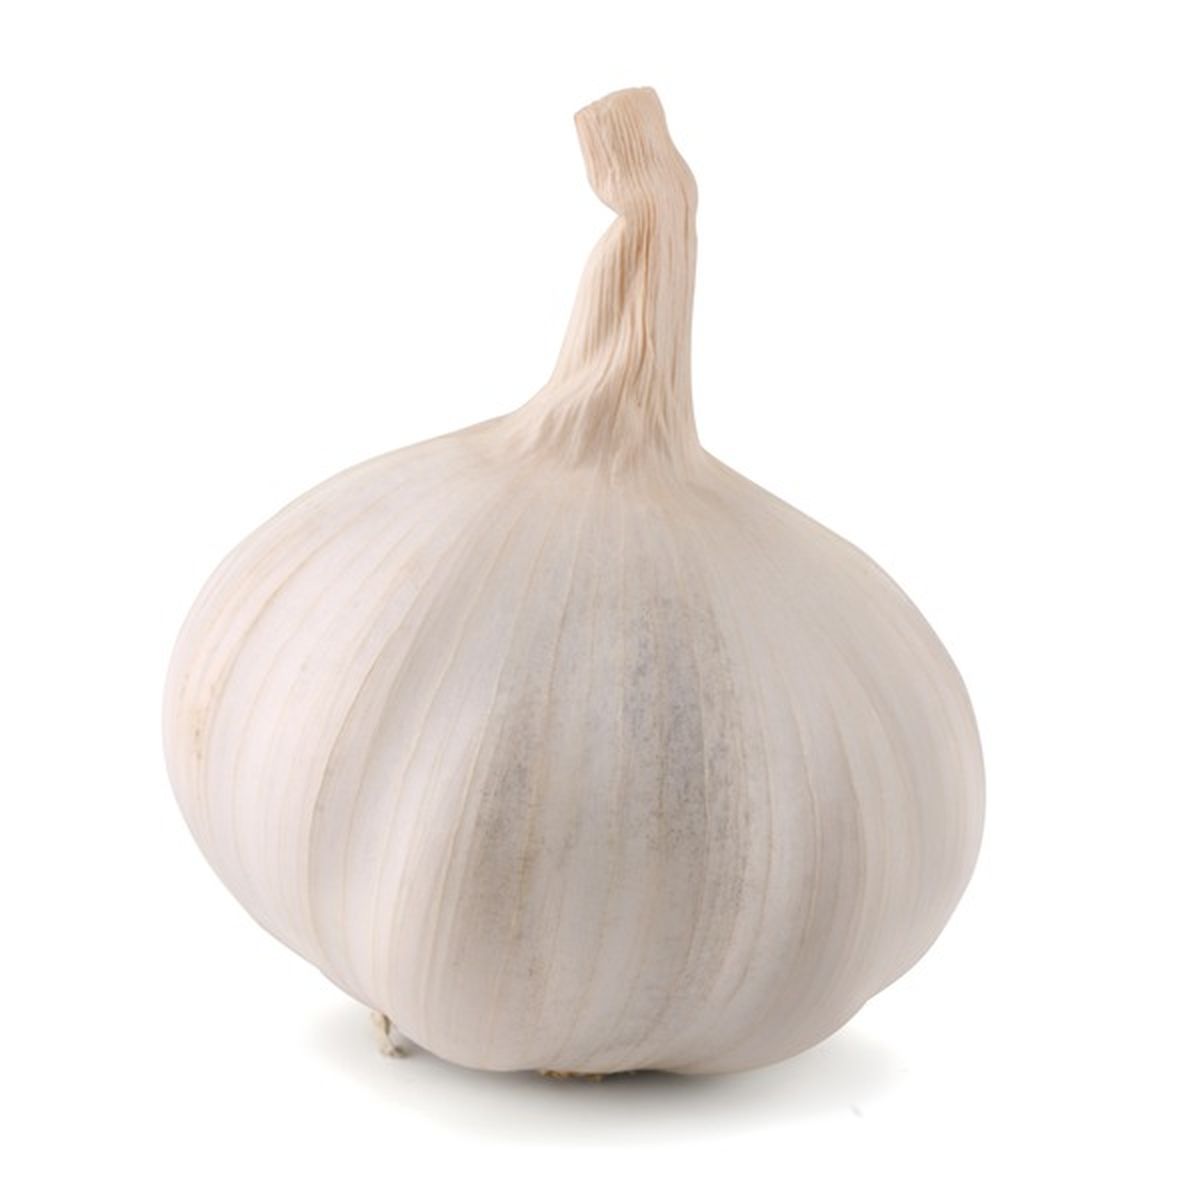 grated garlic